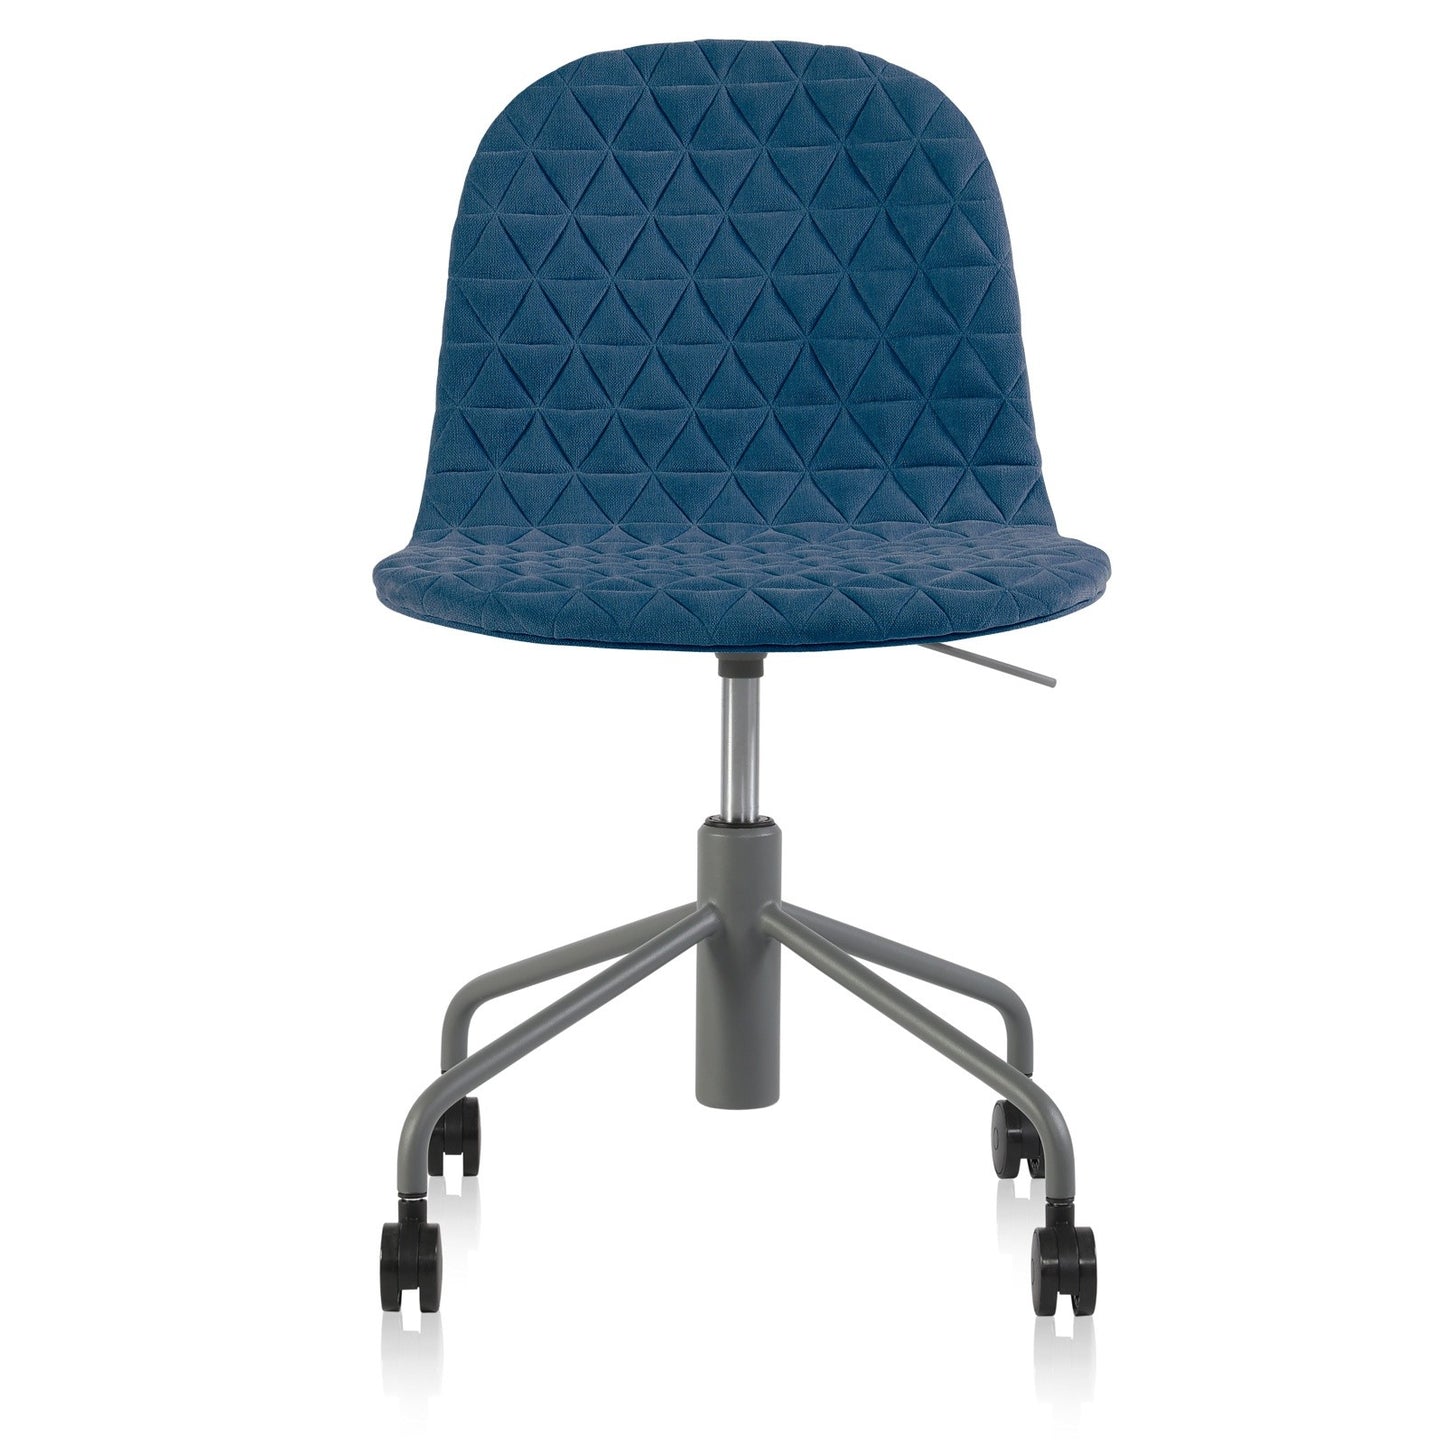 Chair Mannequin 06 - Navy Blue